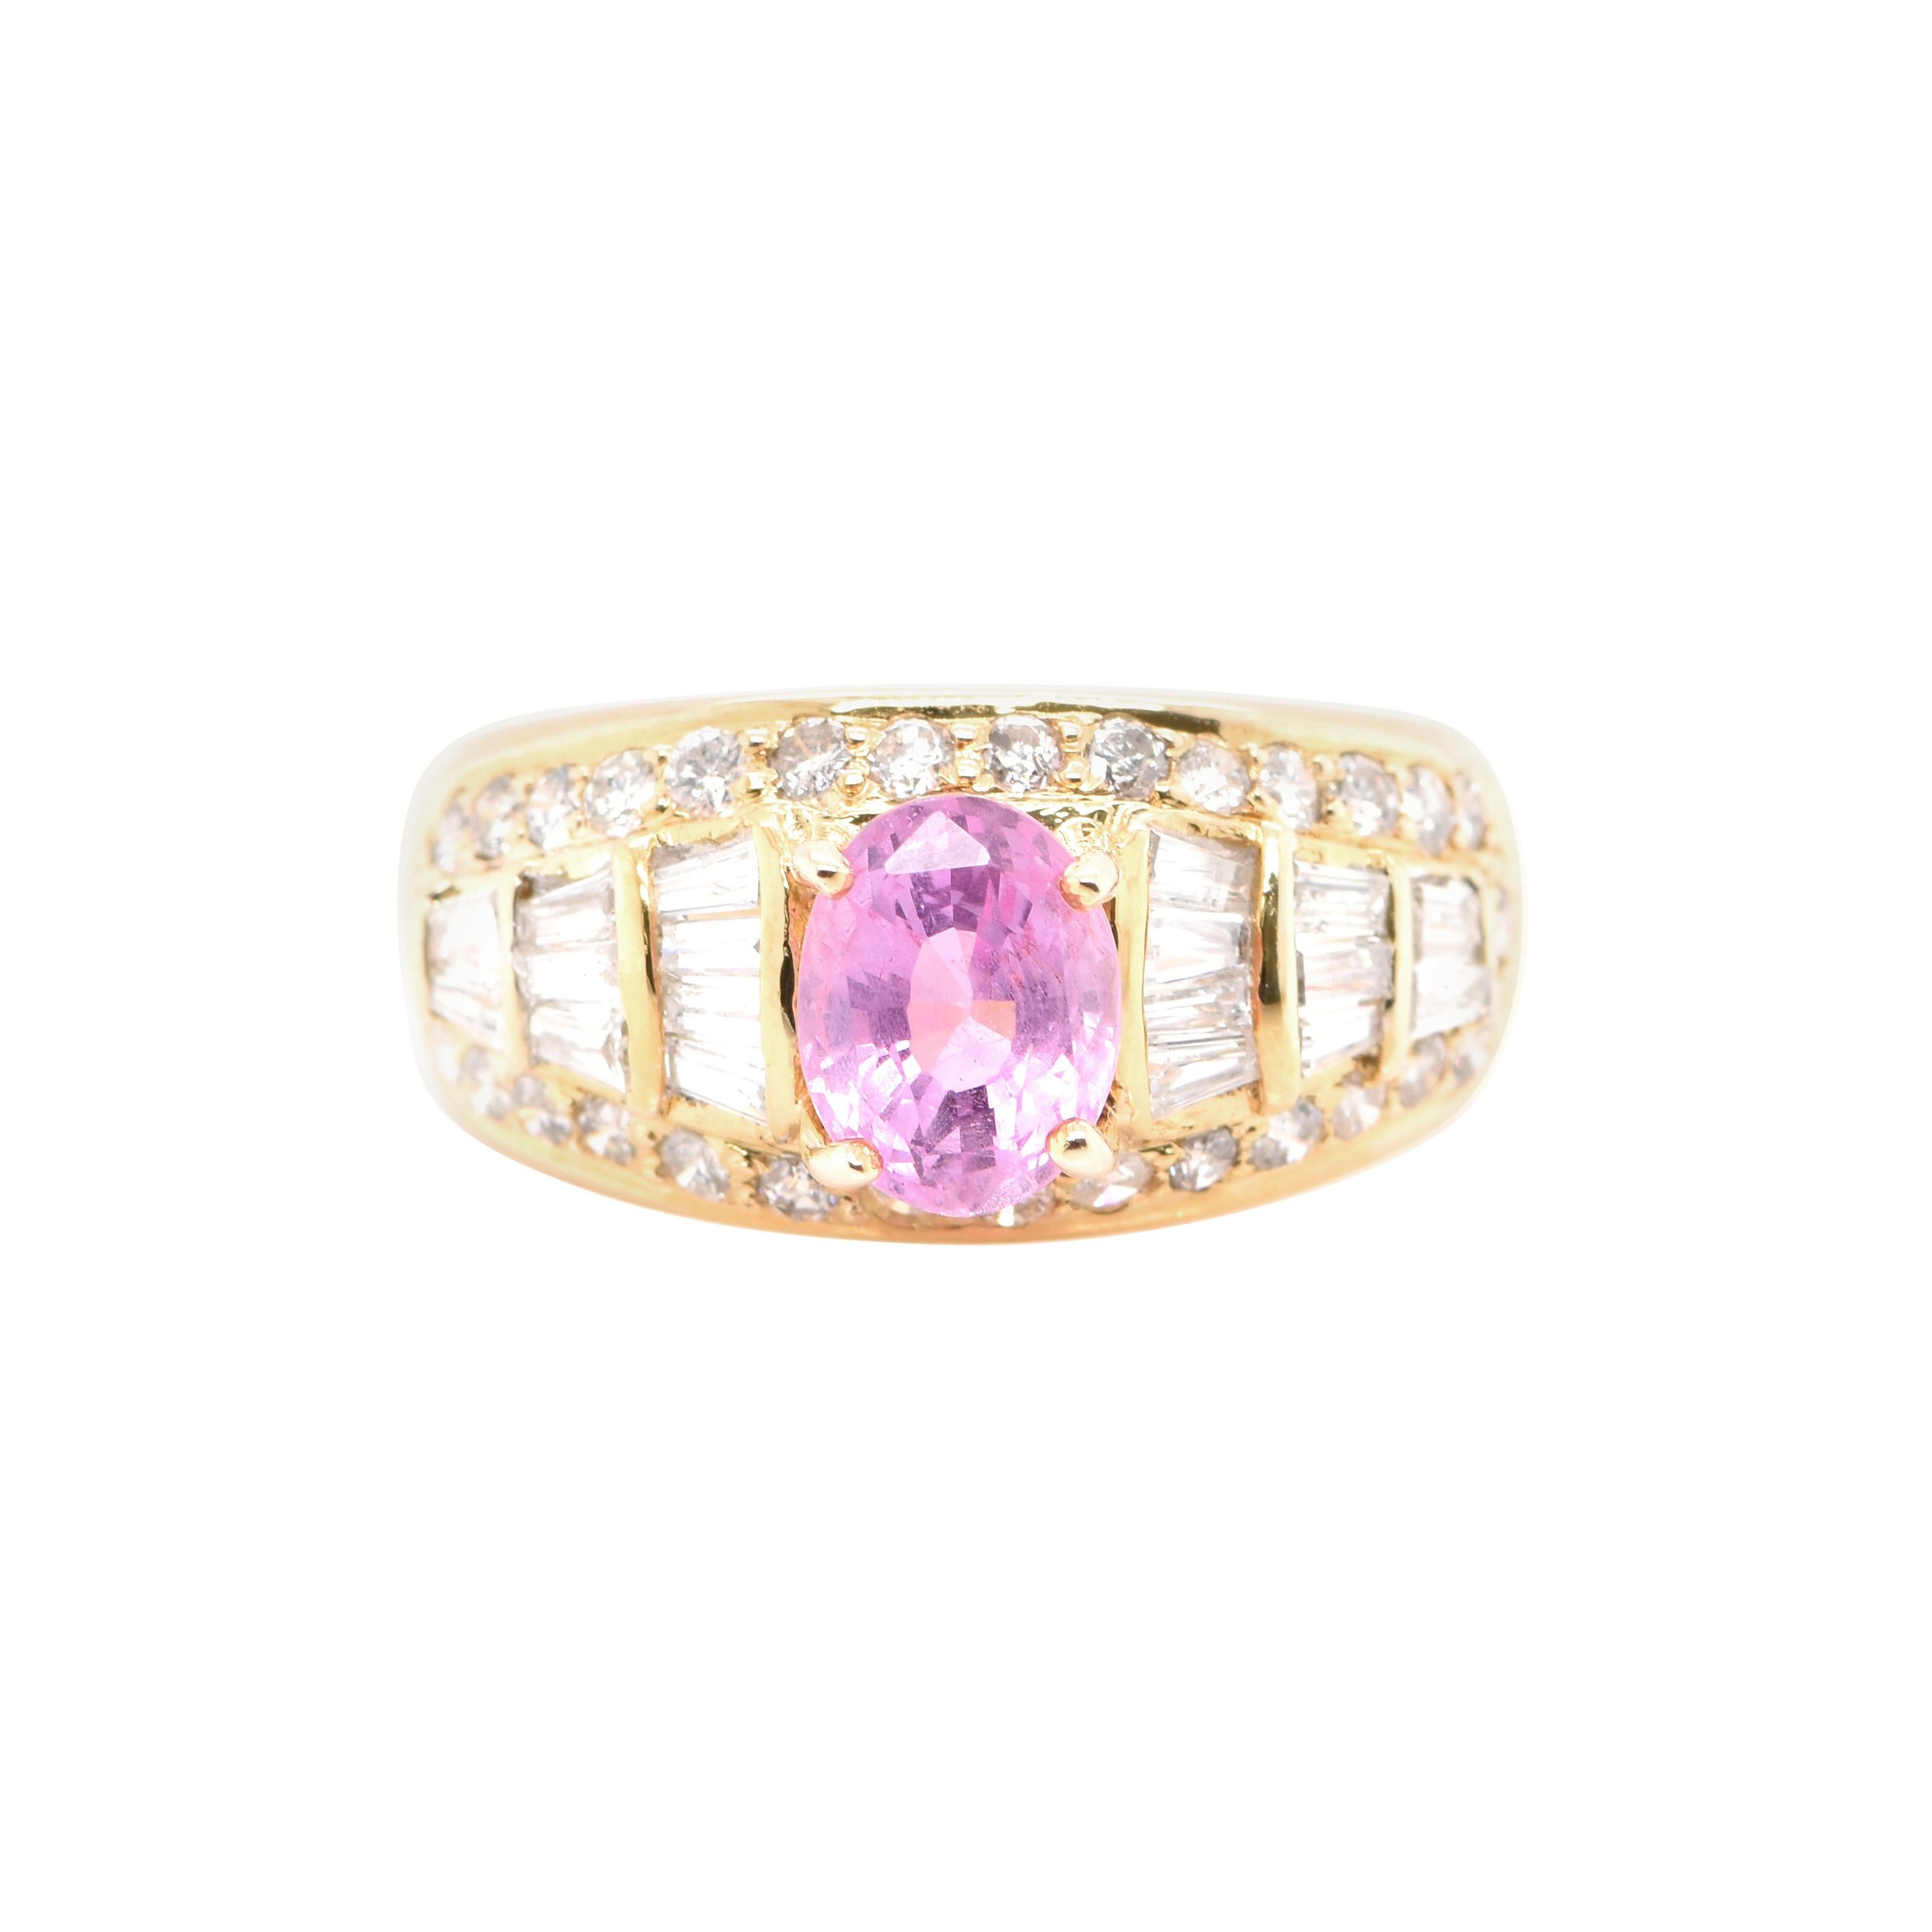 1.72 Carat Natural Pink Sapphire and Diamond Cocktail Ring Set in 18 Karat Gold